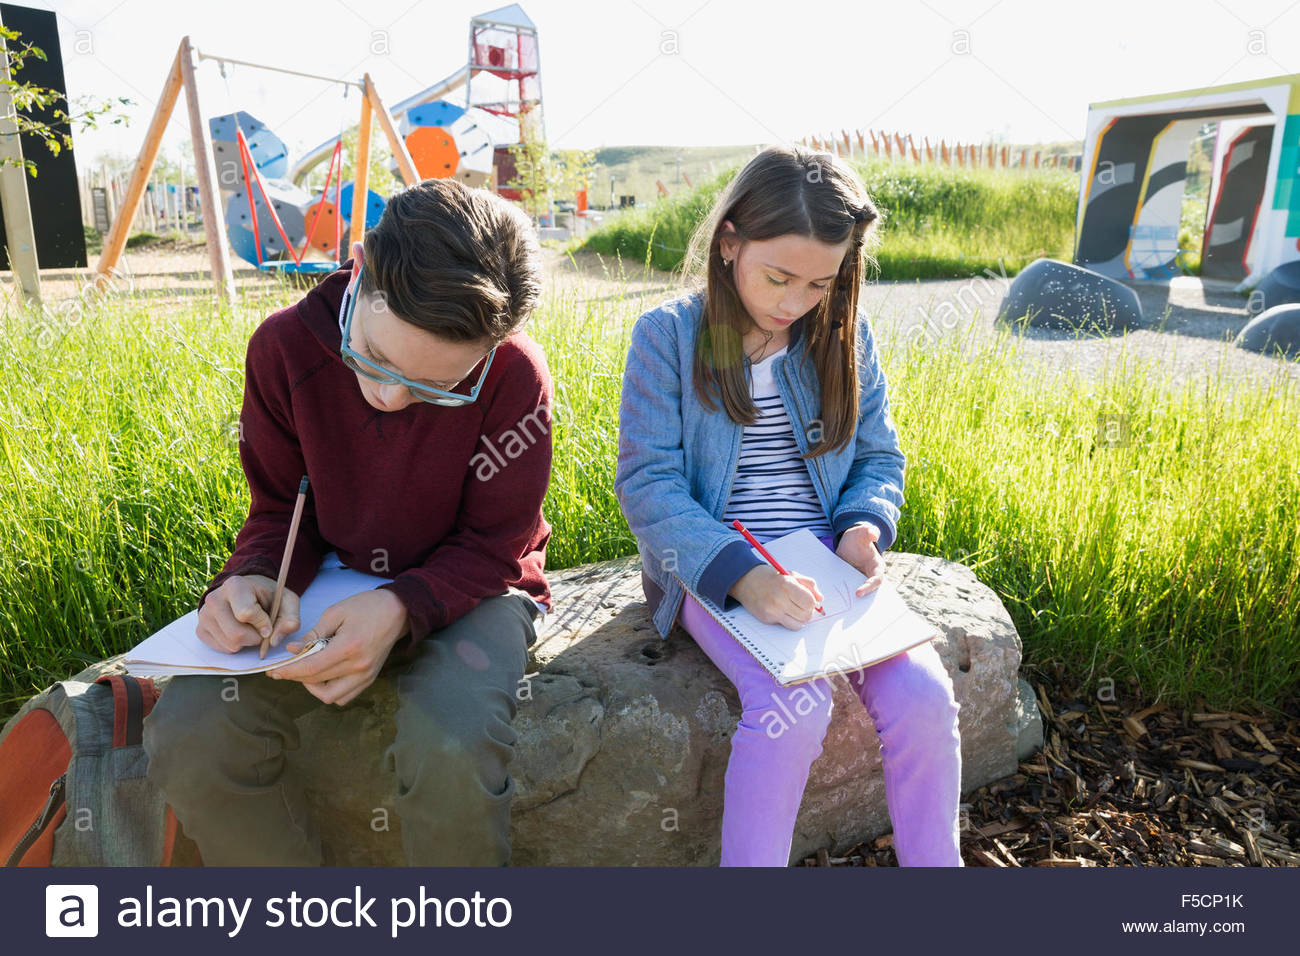 Students doing homework on rock near sunny playground Stock Photo